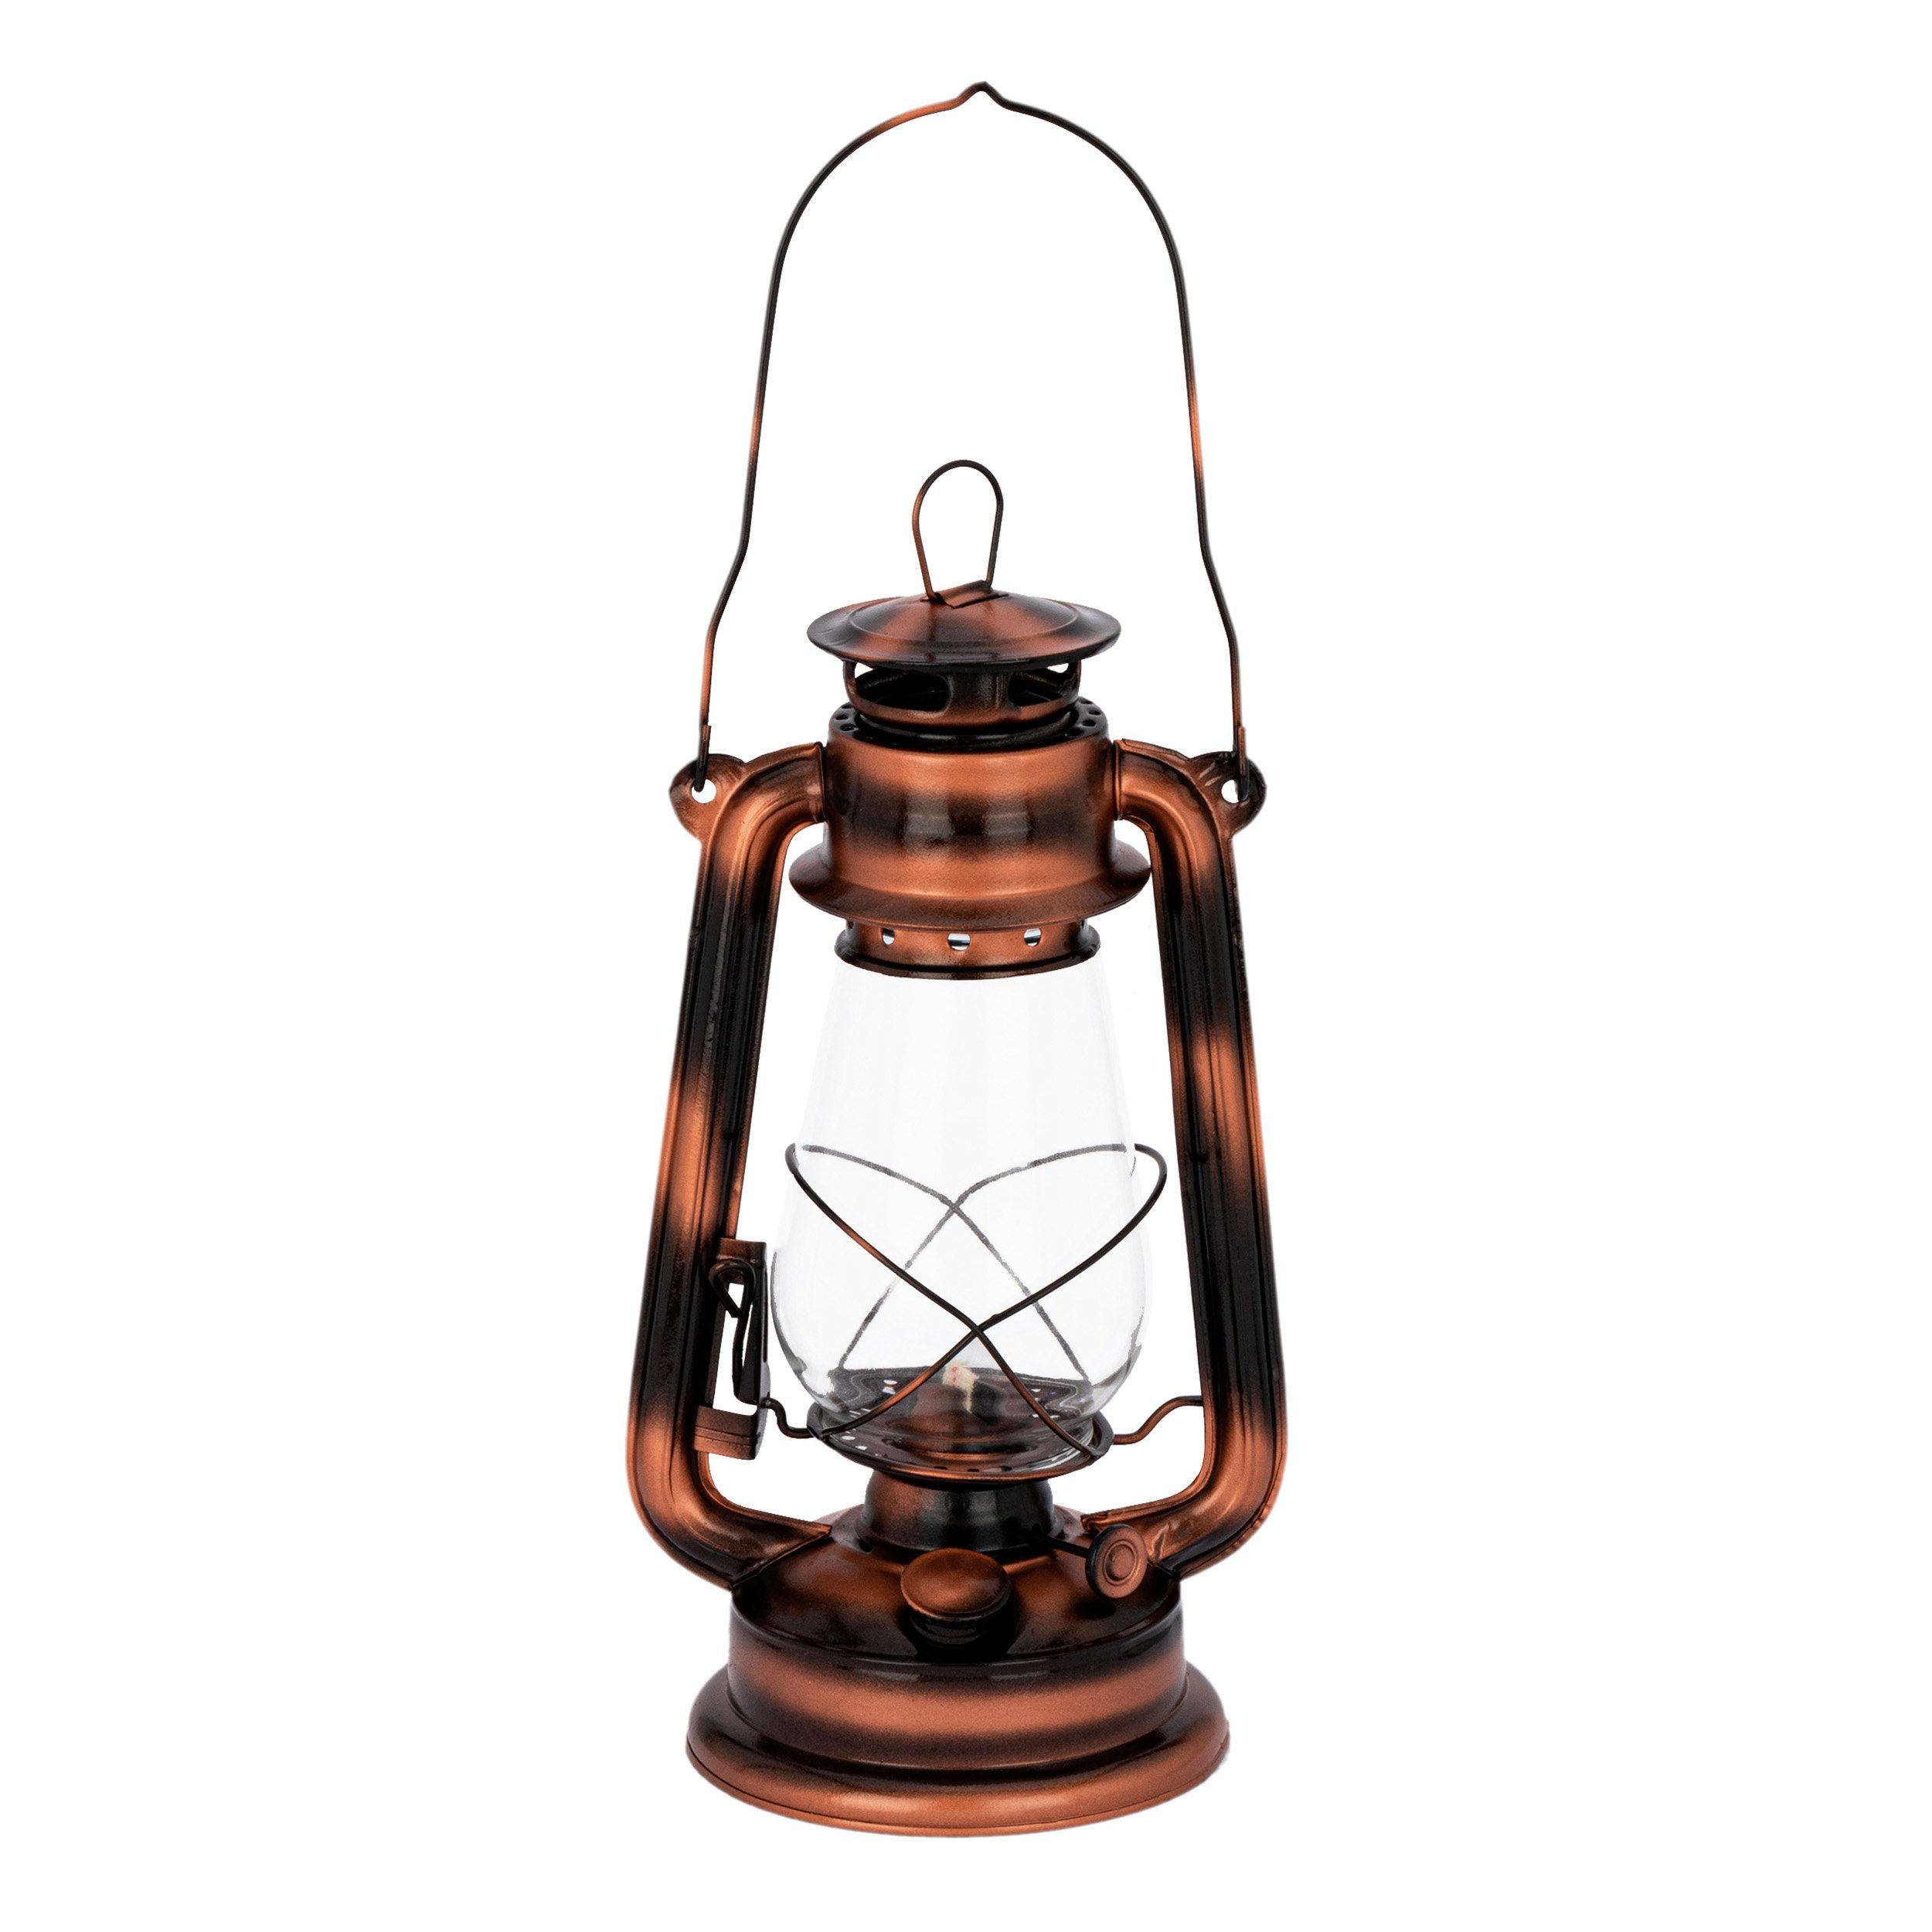 NKlaus Windlicht Sturmlaterne Petroleumlampe Eisen bronzefarben 31x14cm Feuerhand Marit (Petroleumlampe, Petroleumlampe)